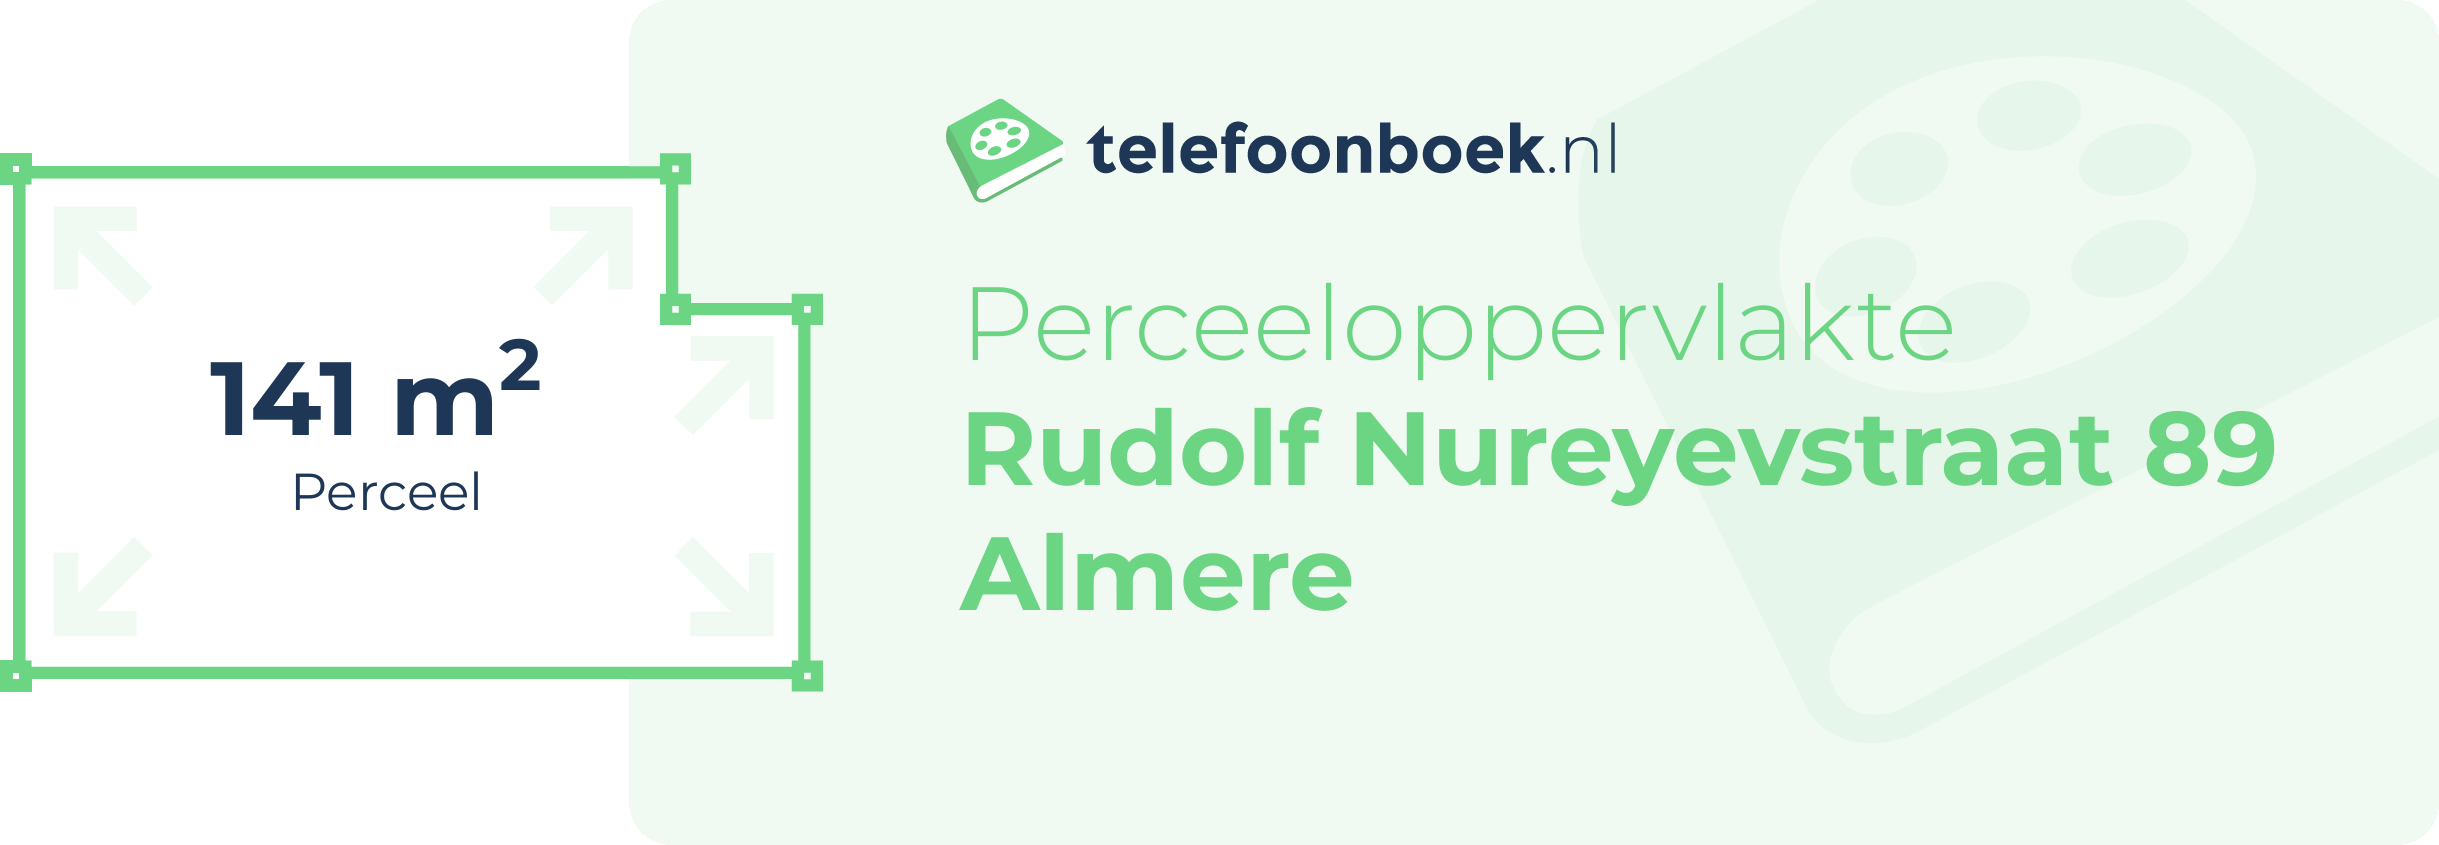 Perceeloppervlakte Rudolf Nureyevstraat 89 Almere